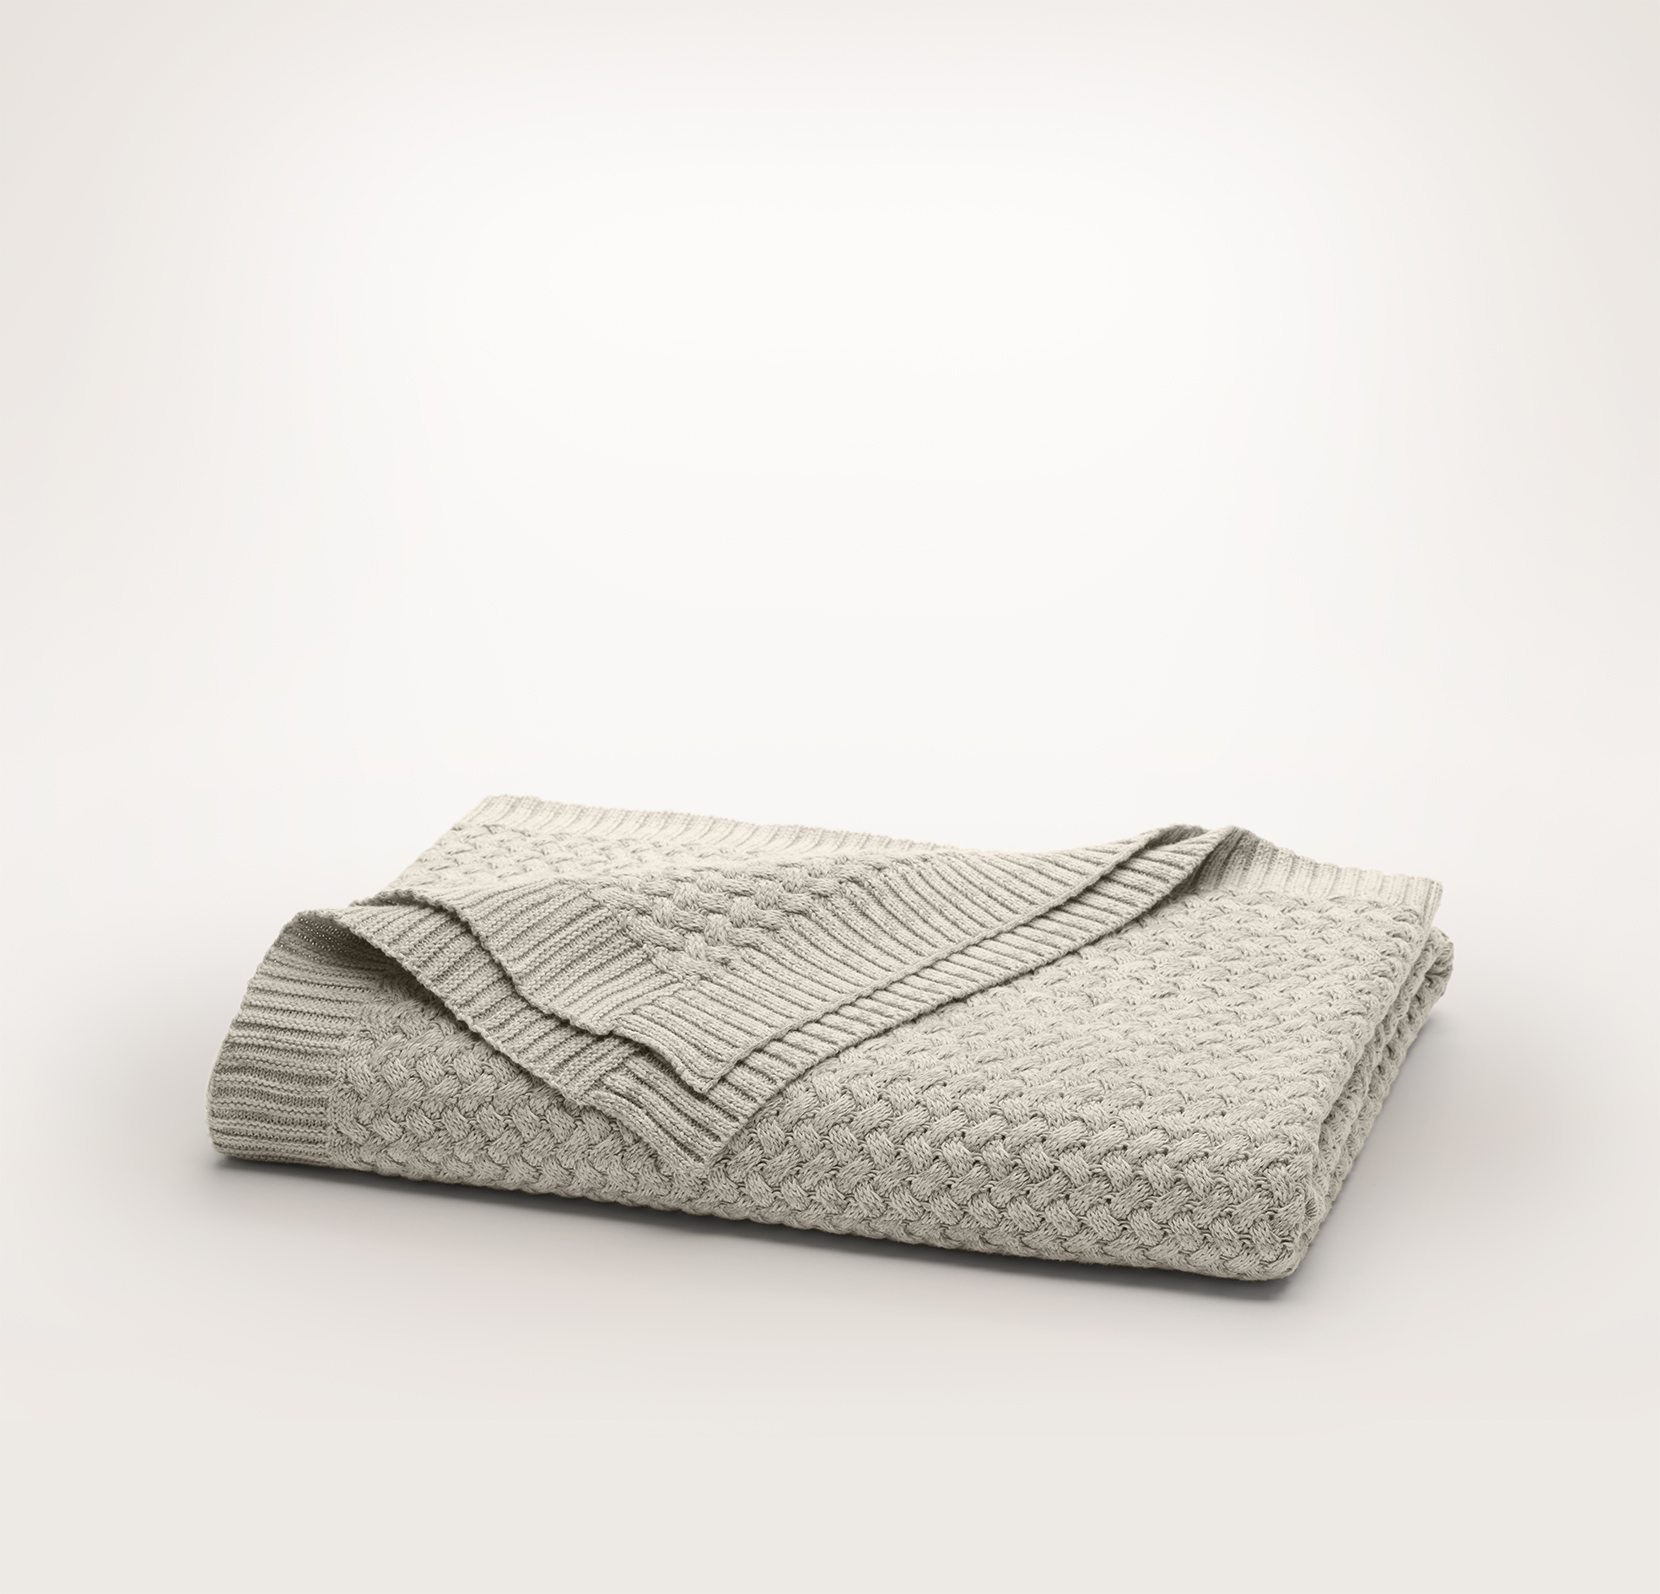 undefined Sweater Knit Throw Blanket - Slide 5